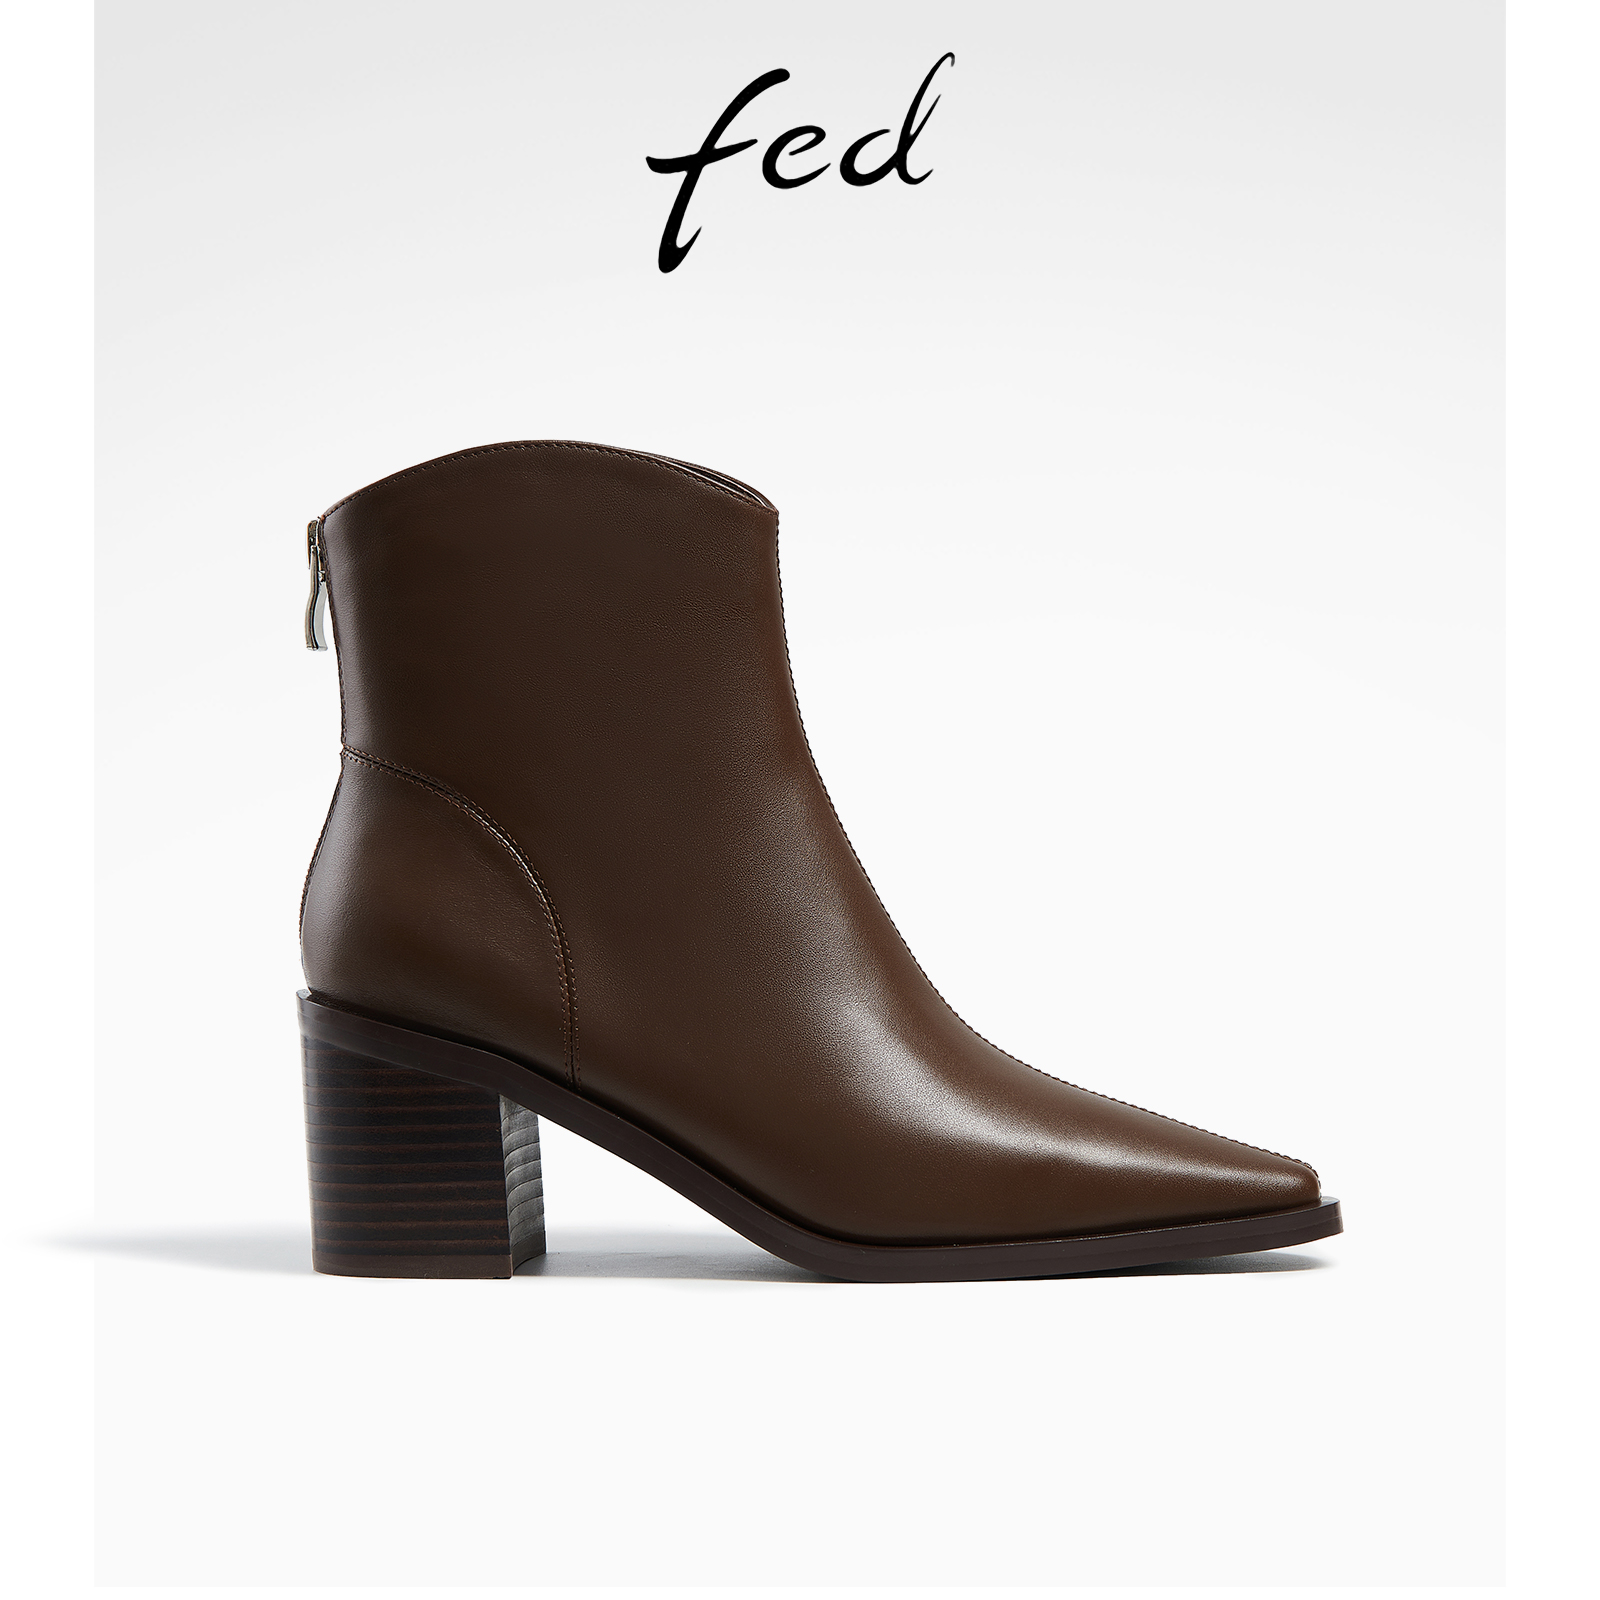 fed真皮短靴冬季新款靴子粗跟时装靴高跟瘦瘦靴女款R1014-YAB810